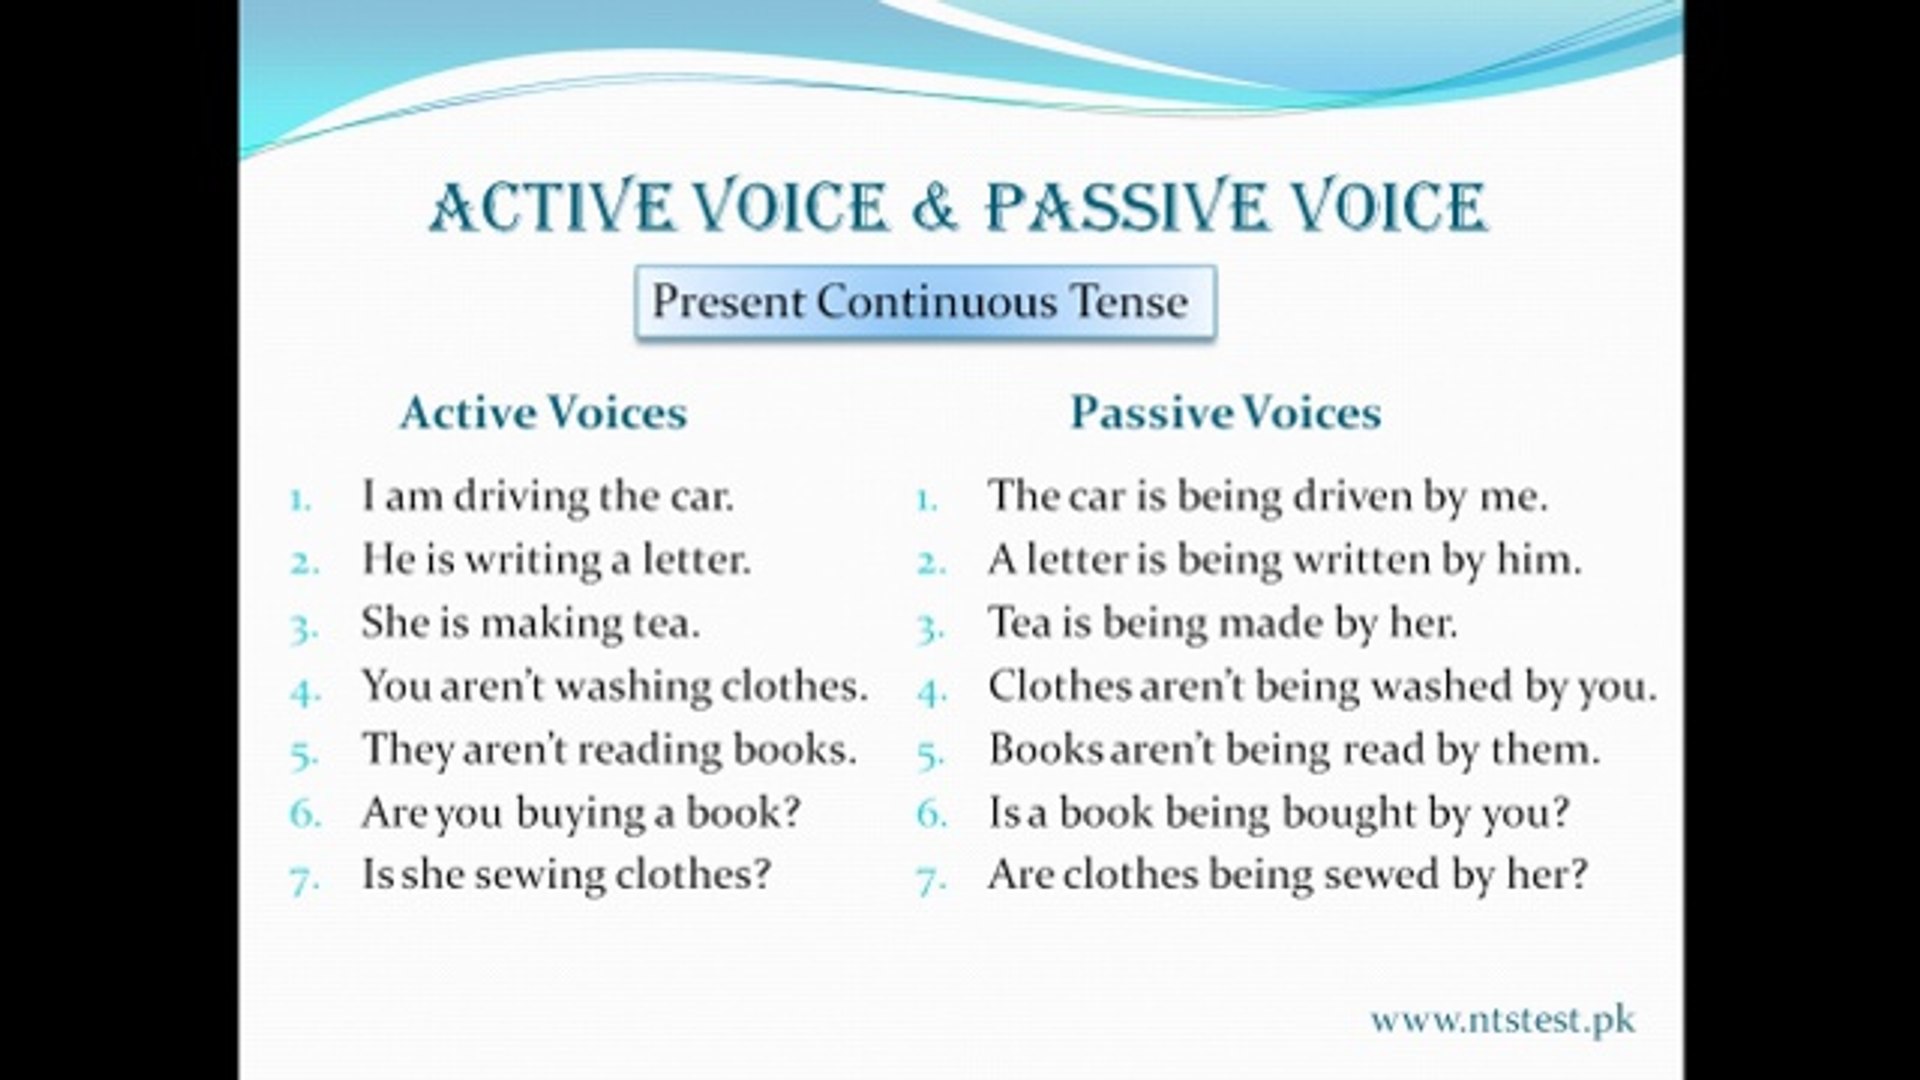 Passive Voice Present Continuous Tense Exercises Exercise Poster